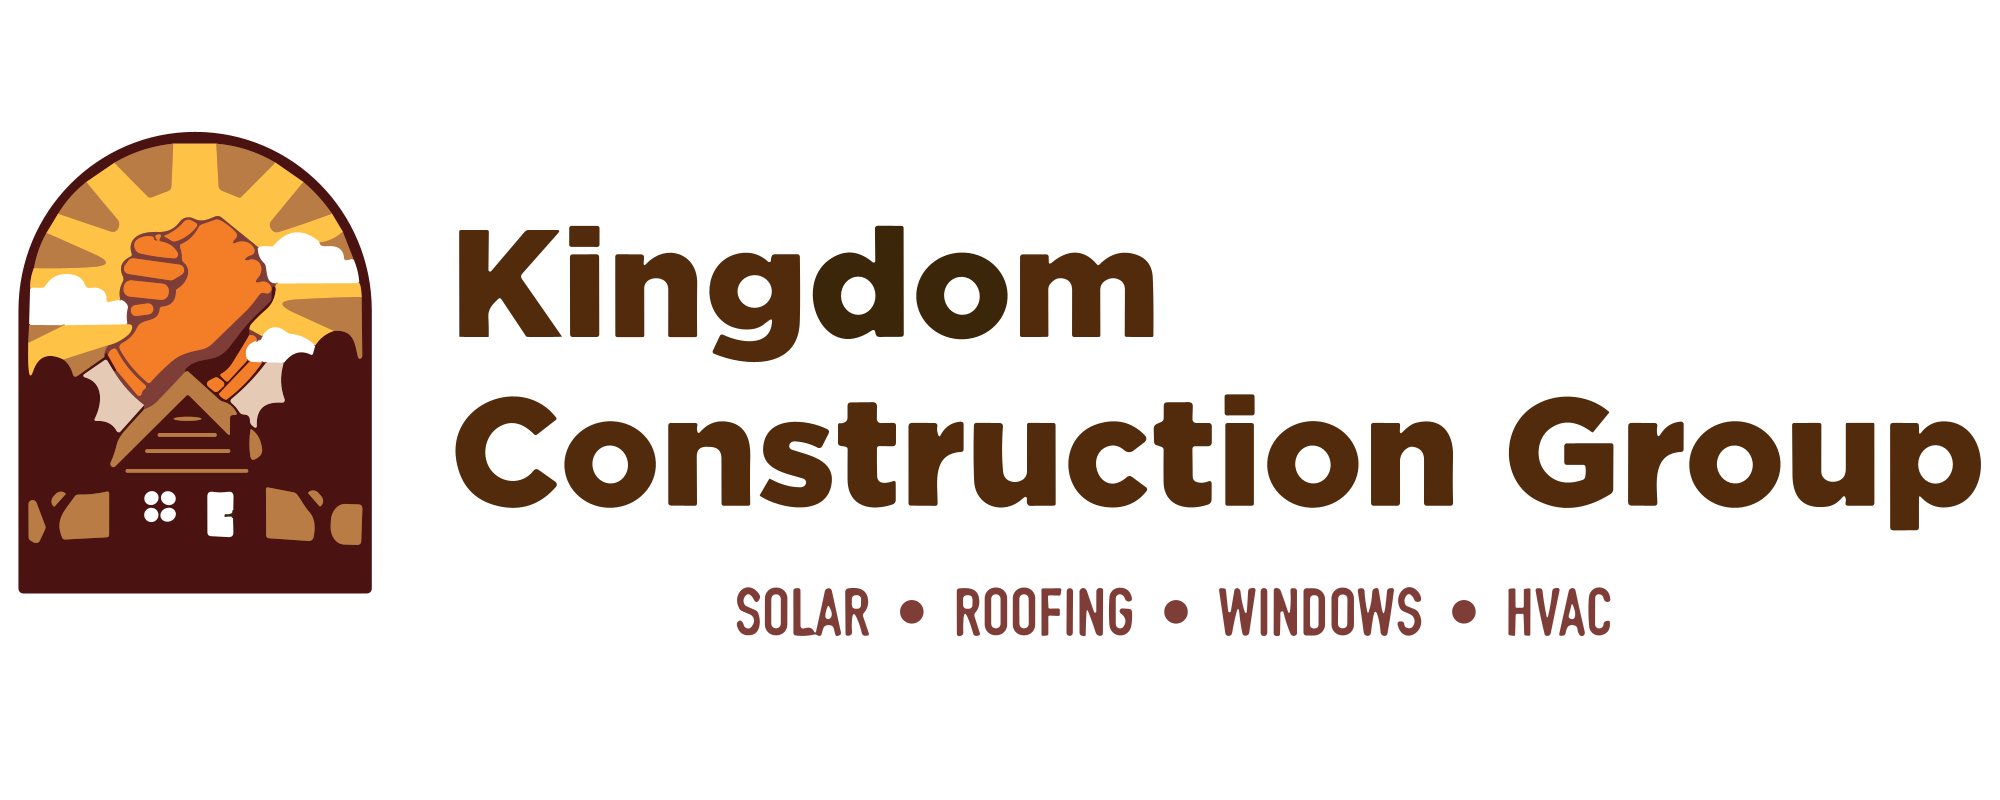 Kingdom Construction Group